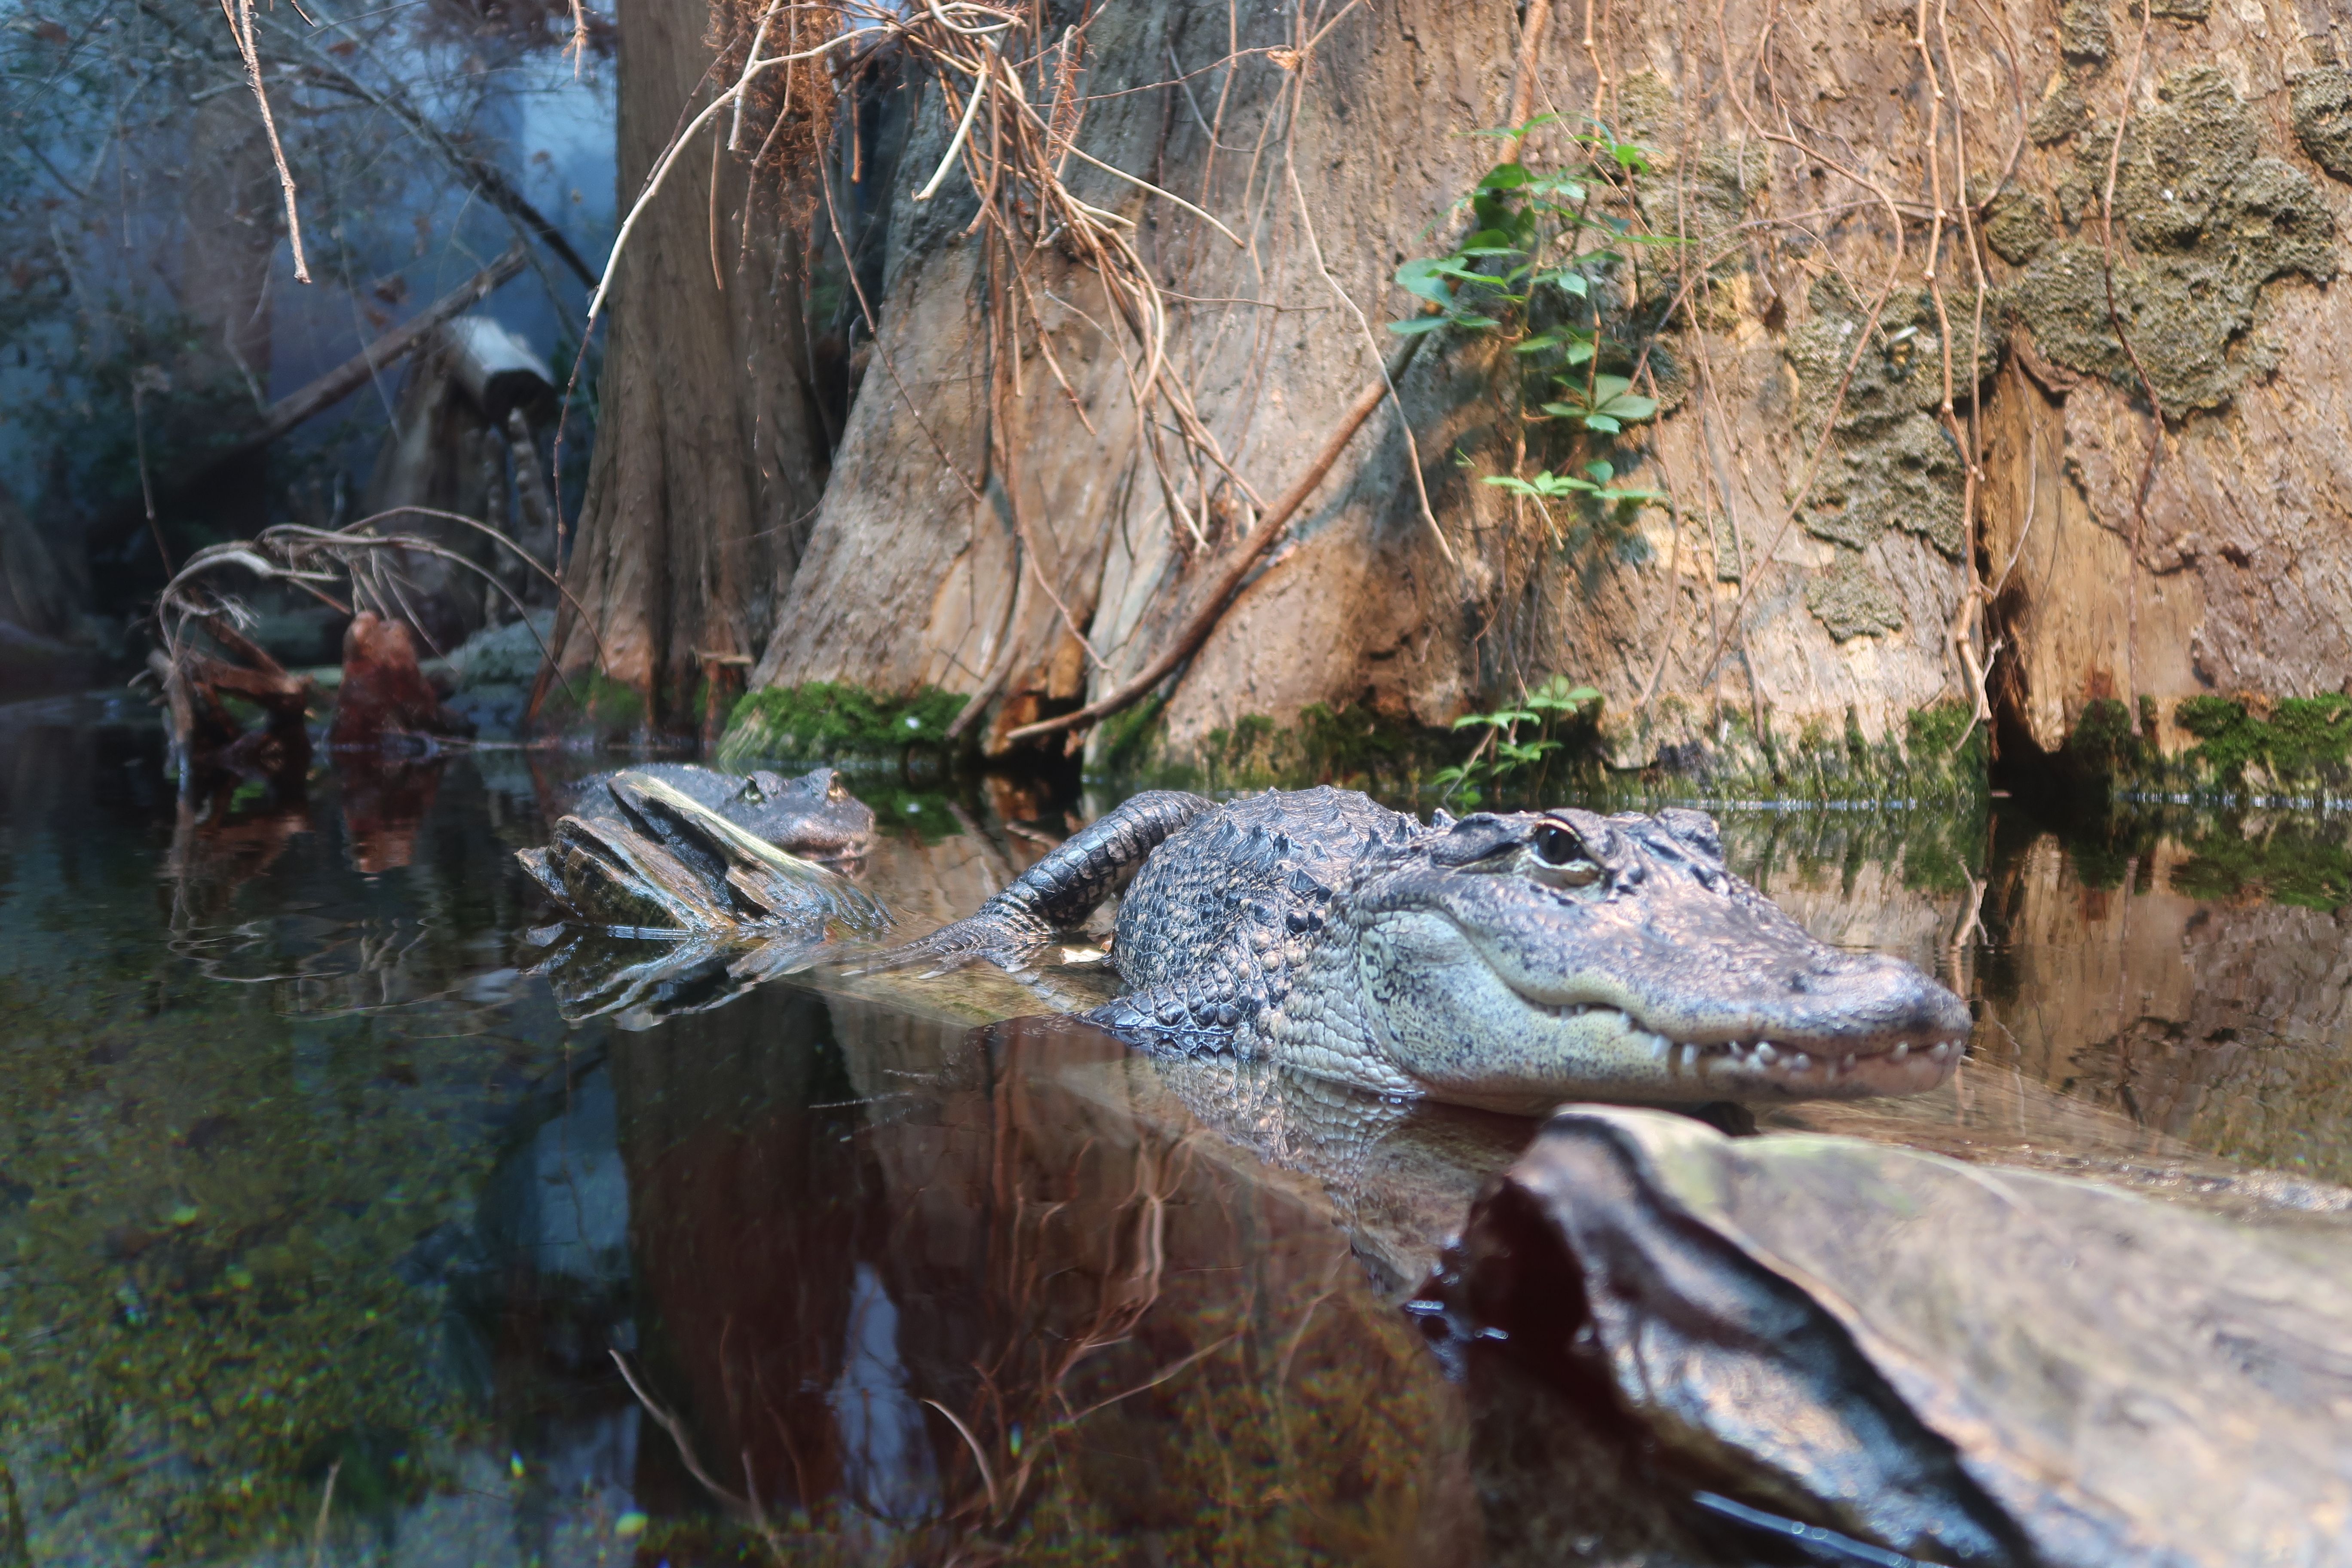 Big alligators The Tennessee Aquarium in Chattanooga.JPG